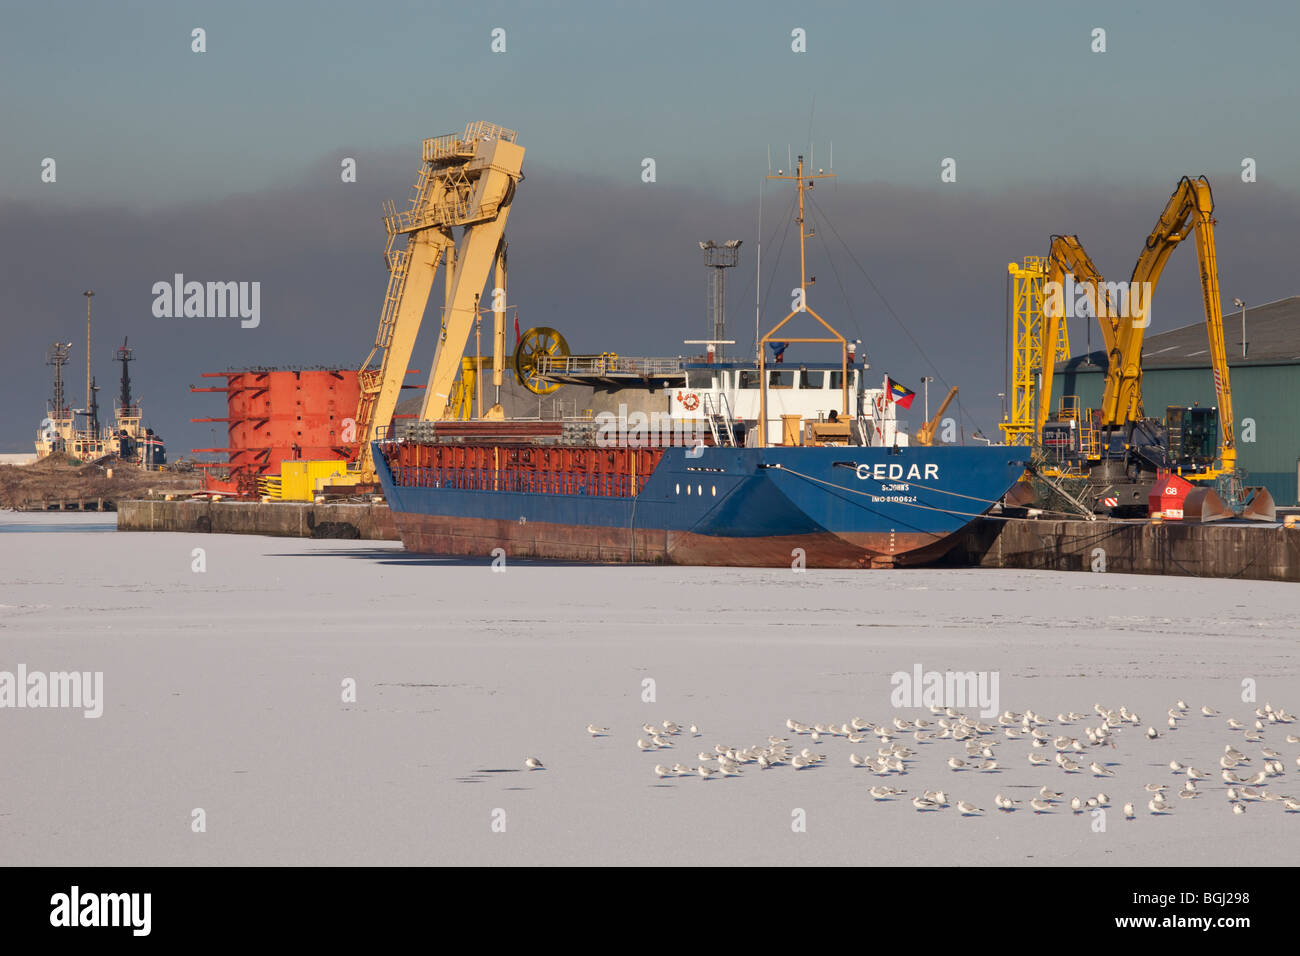 Leith docks frozen over Stock Photo